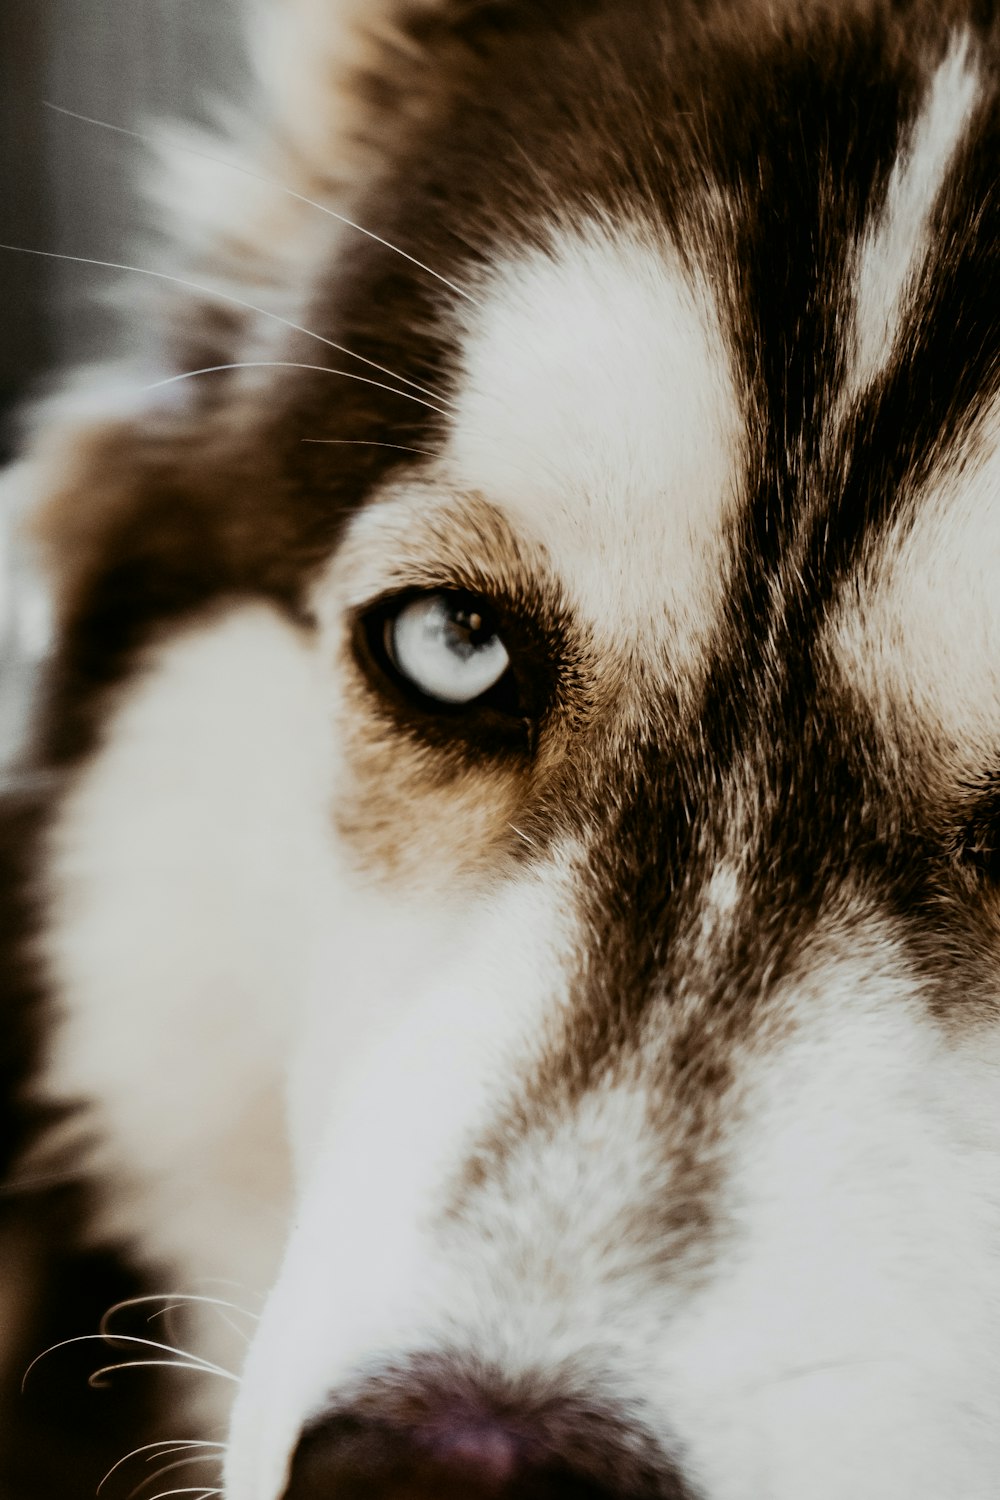 a close up of a dog